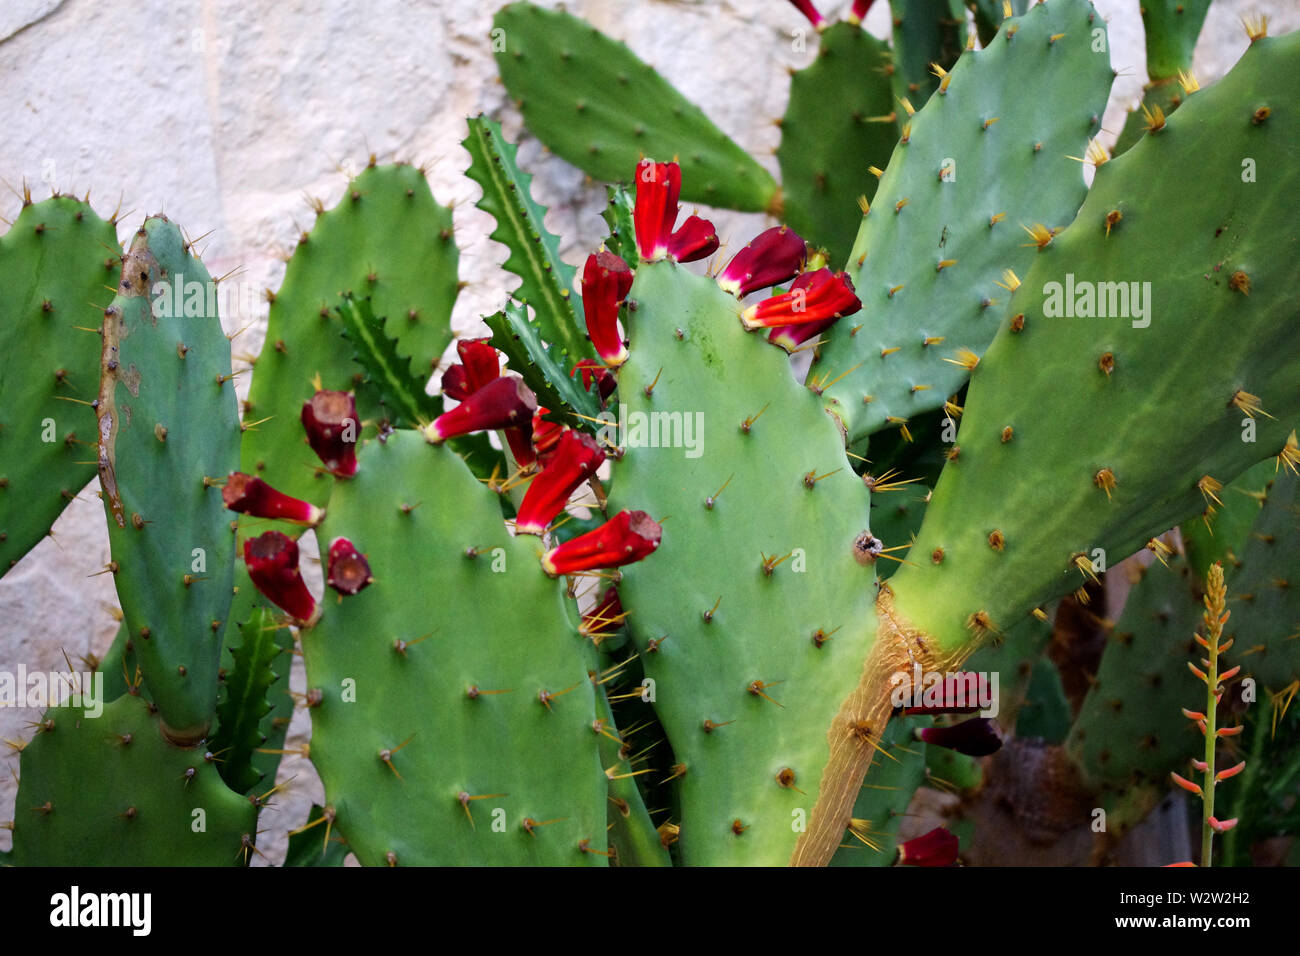 Flowering cactus plant Stock Photo